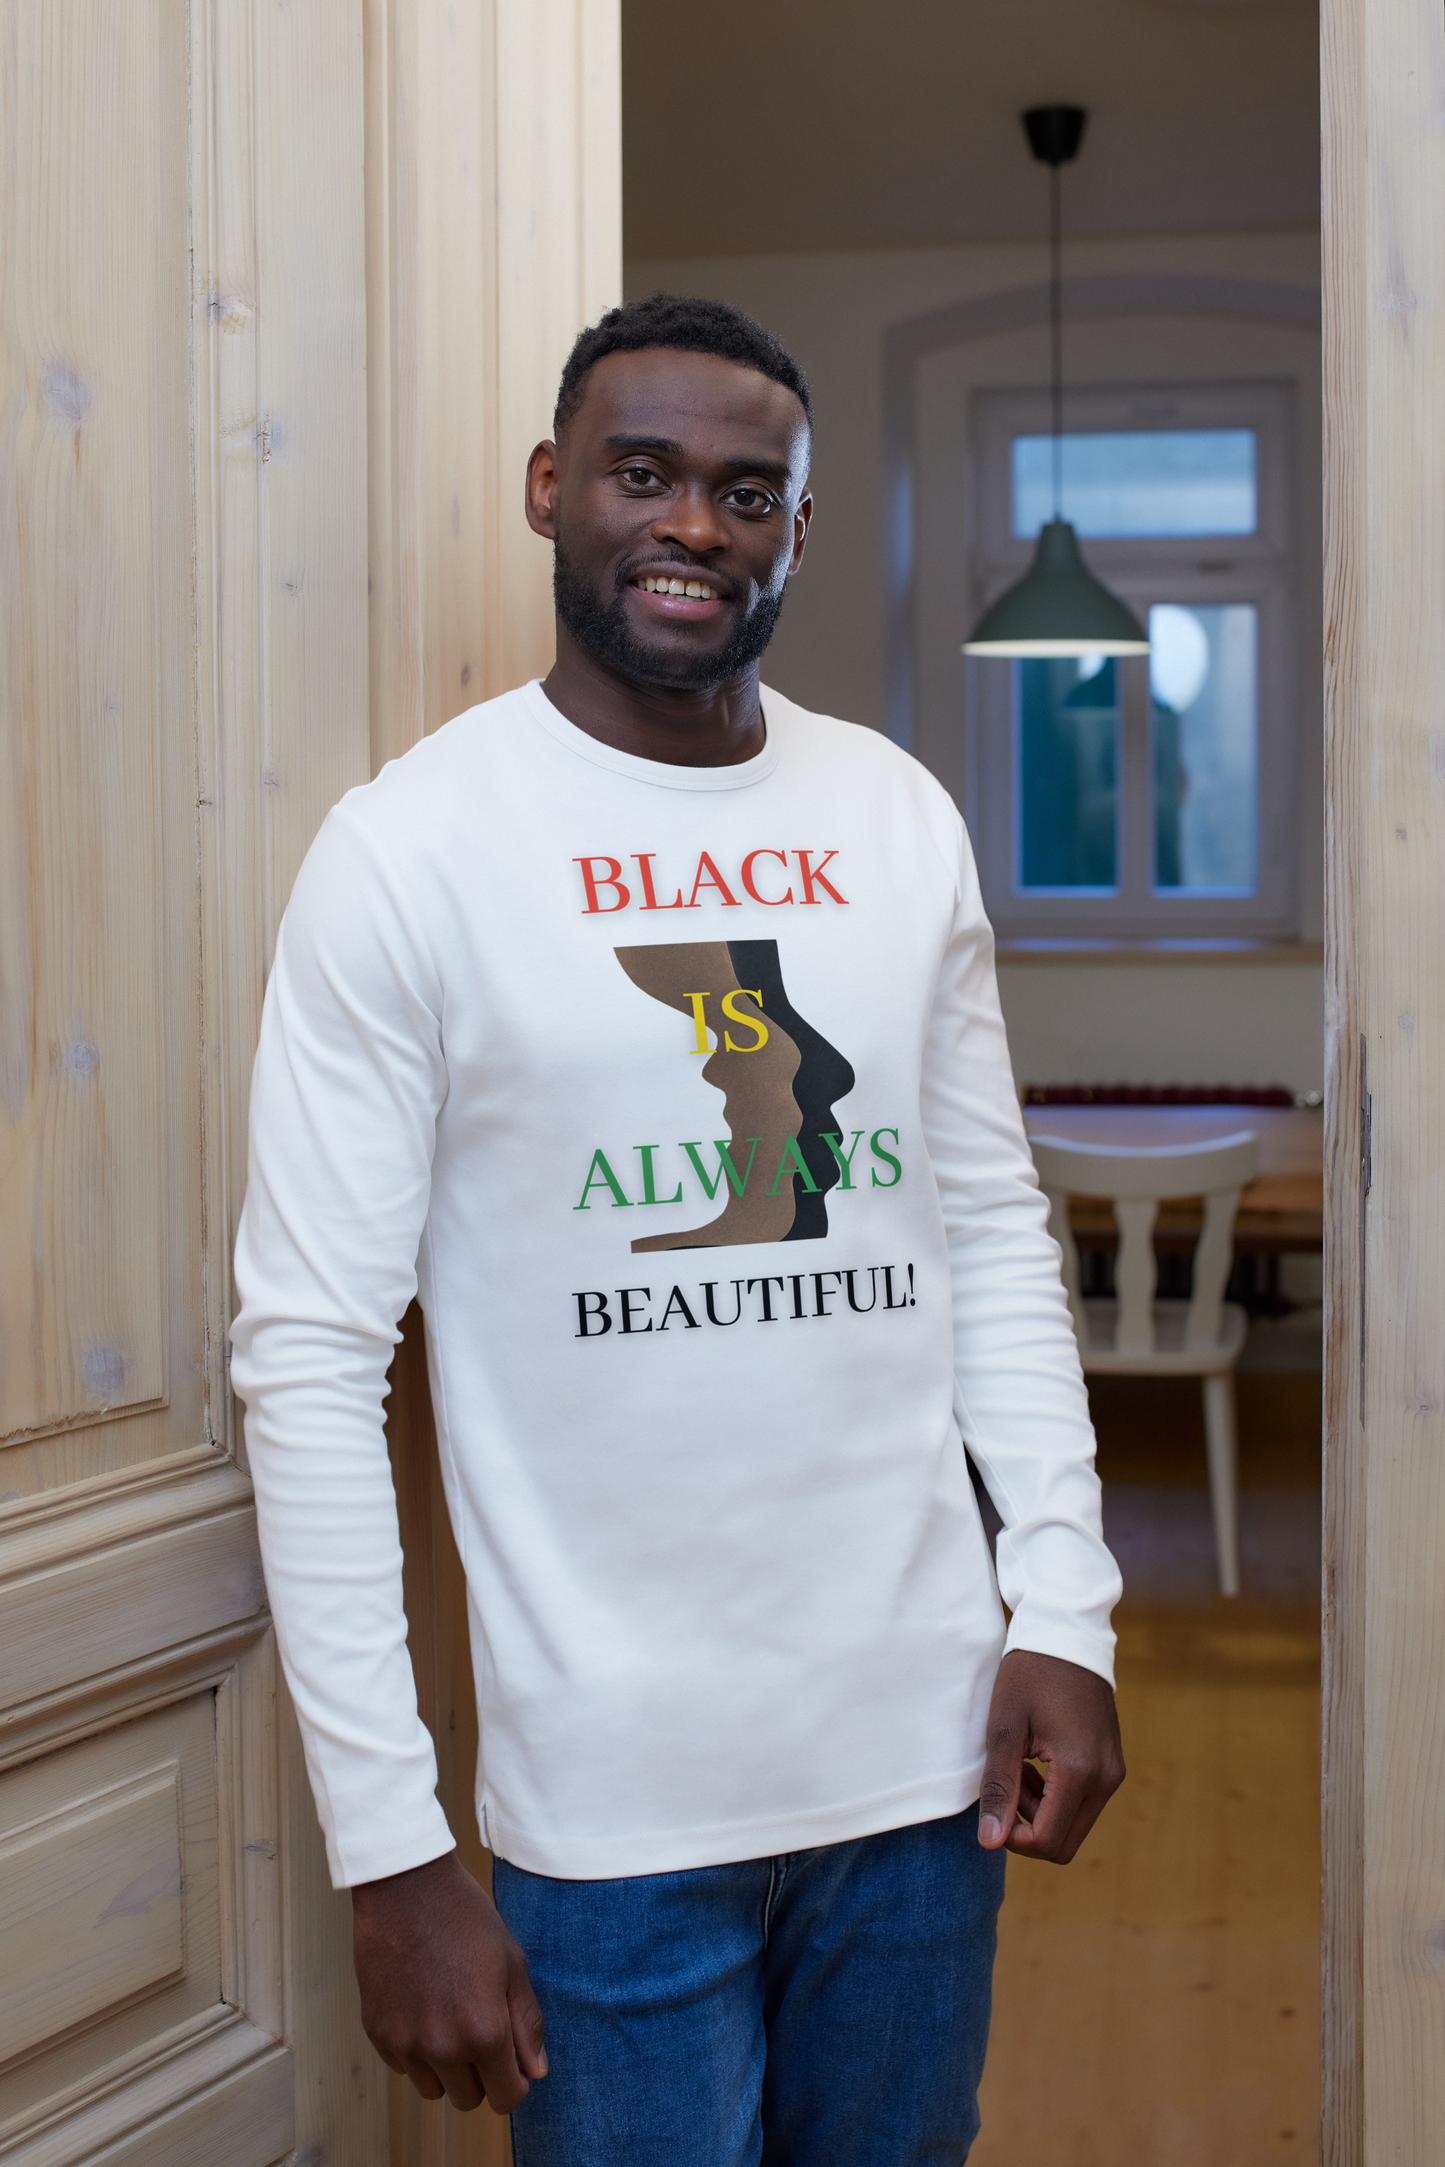 Black Is Always Beautiful!  (Unisex Long Sleeve Tee)